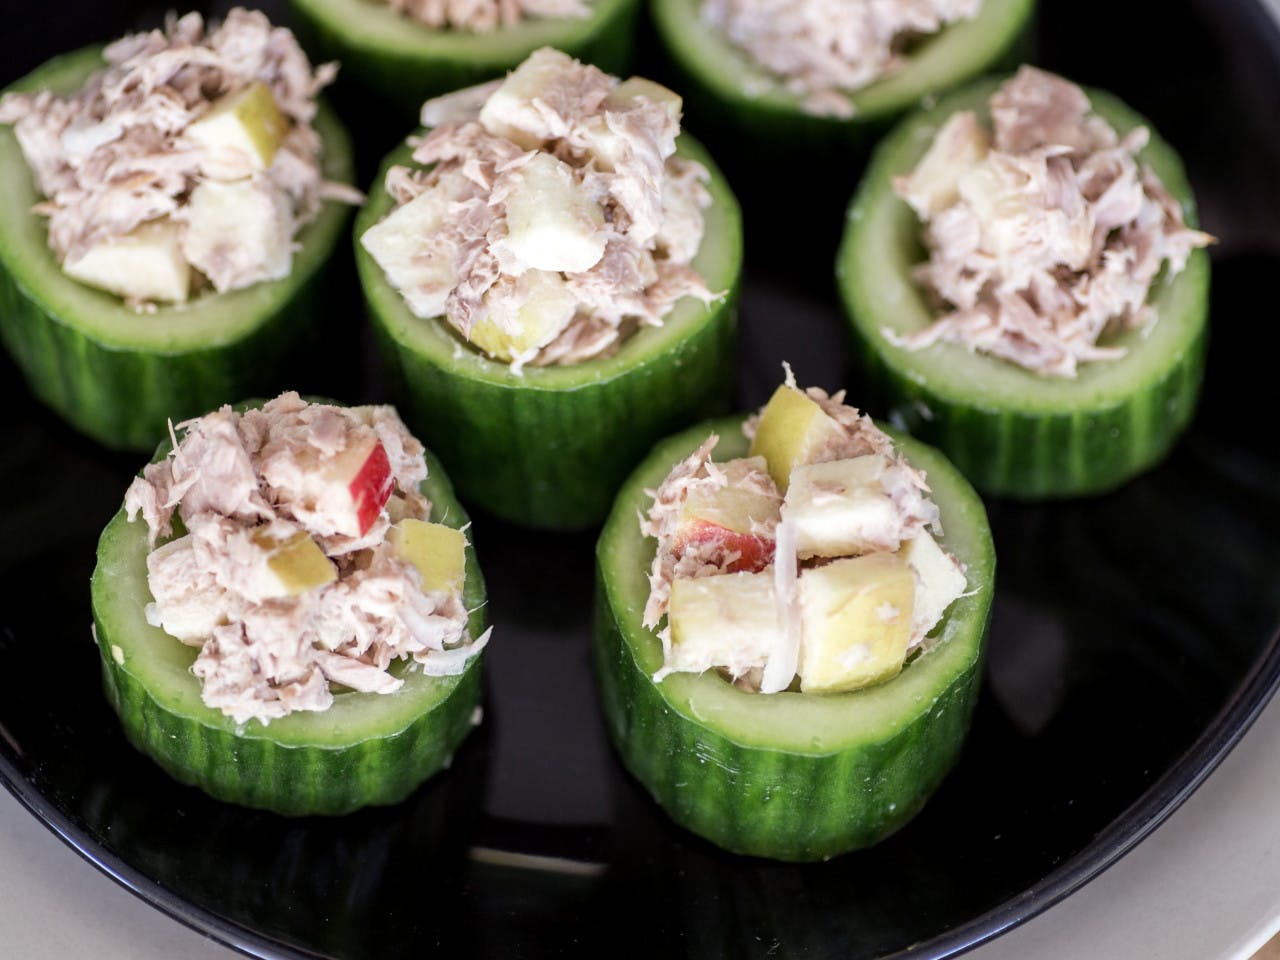 Cucumber bites with tuna salad